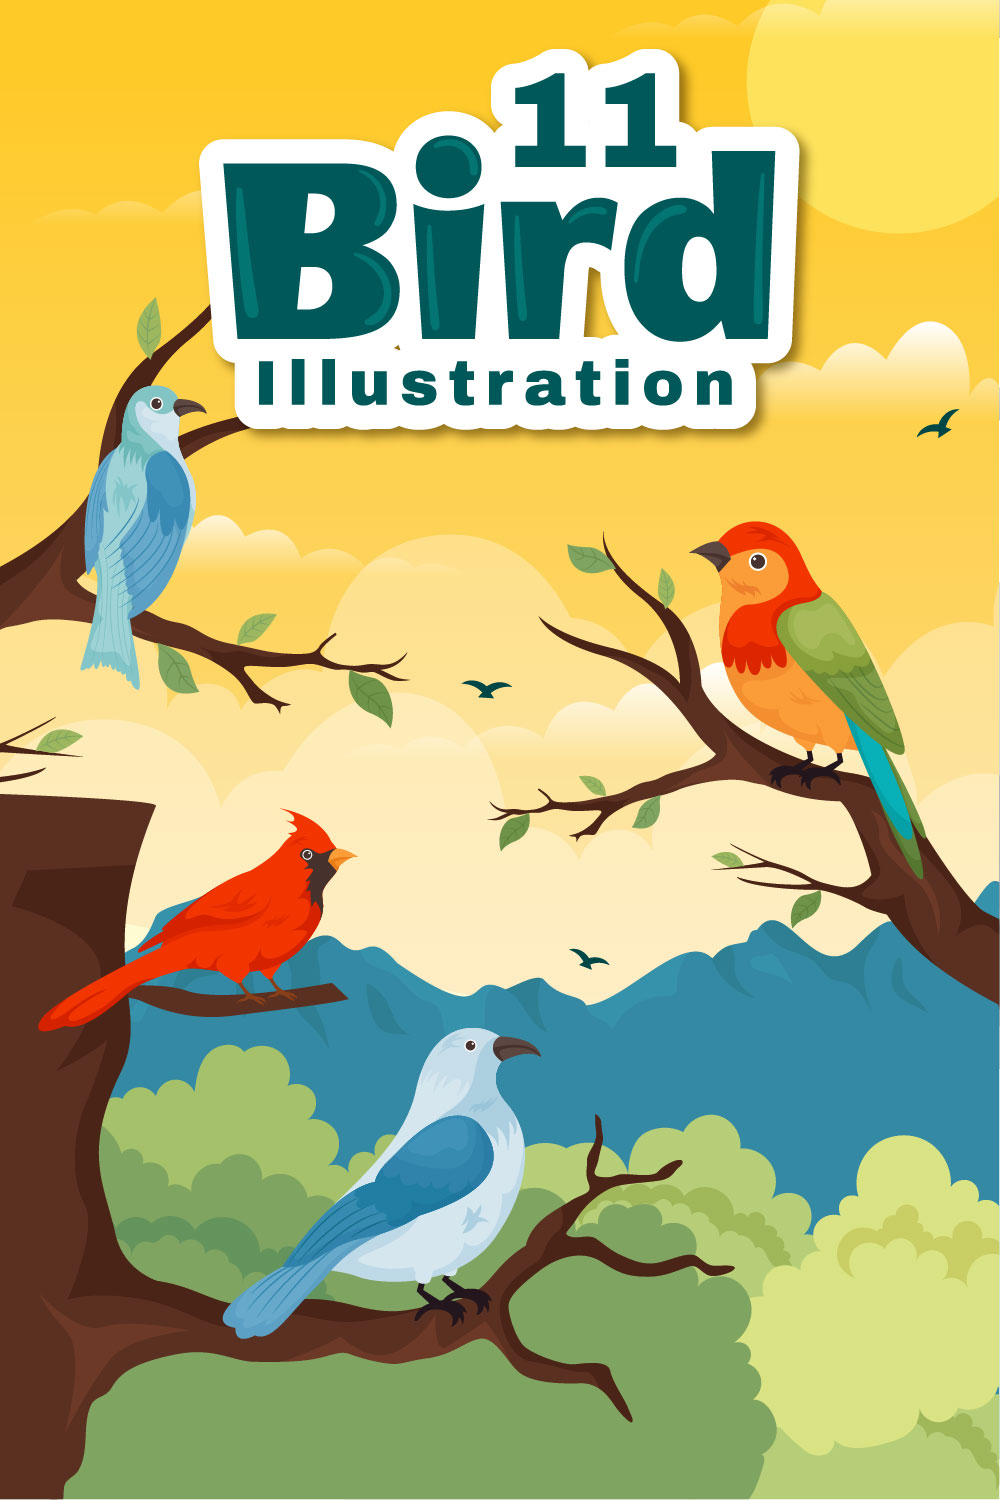 11 Bird Animal Vector Illustration pinterest preview image.